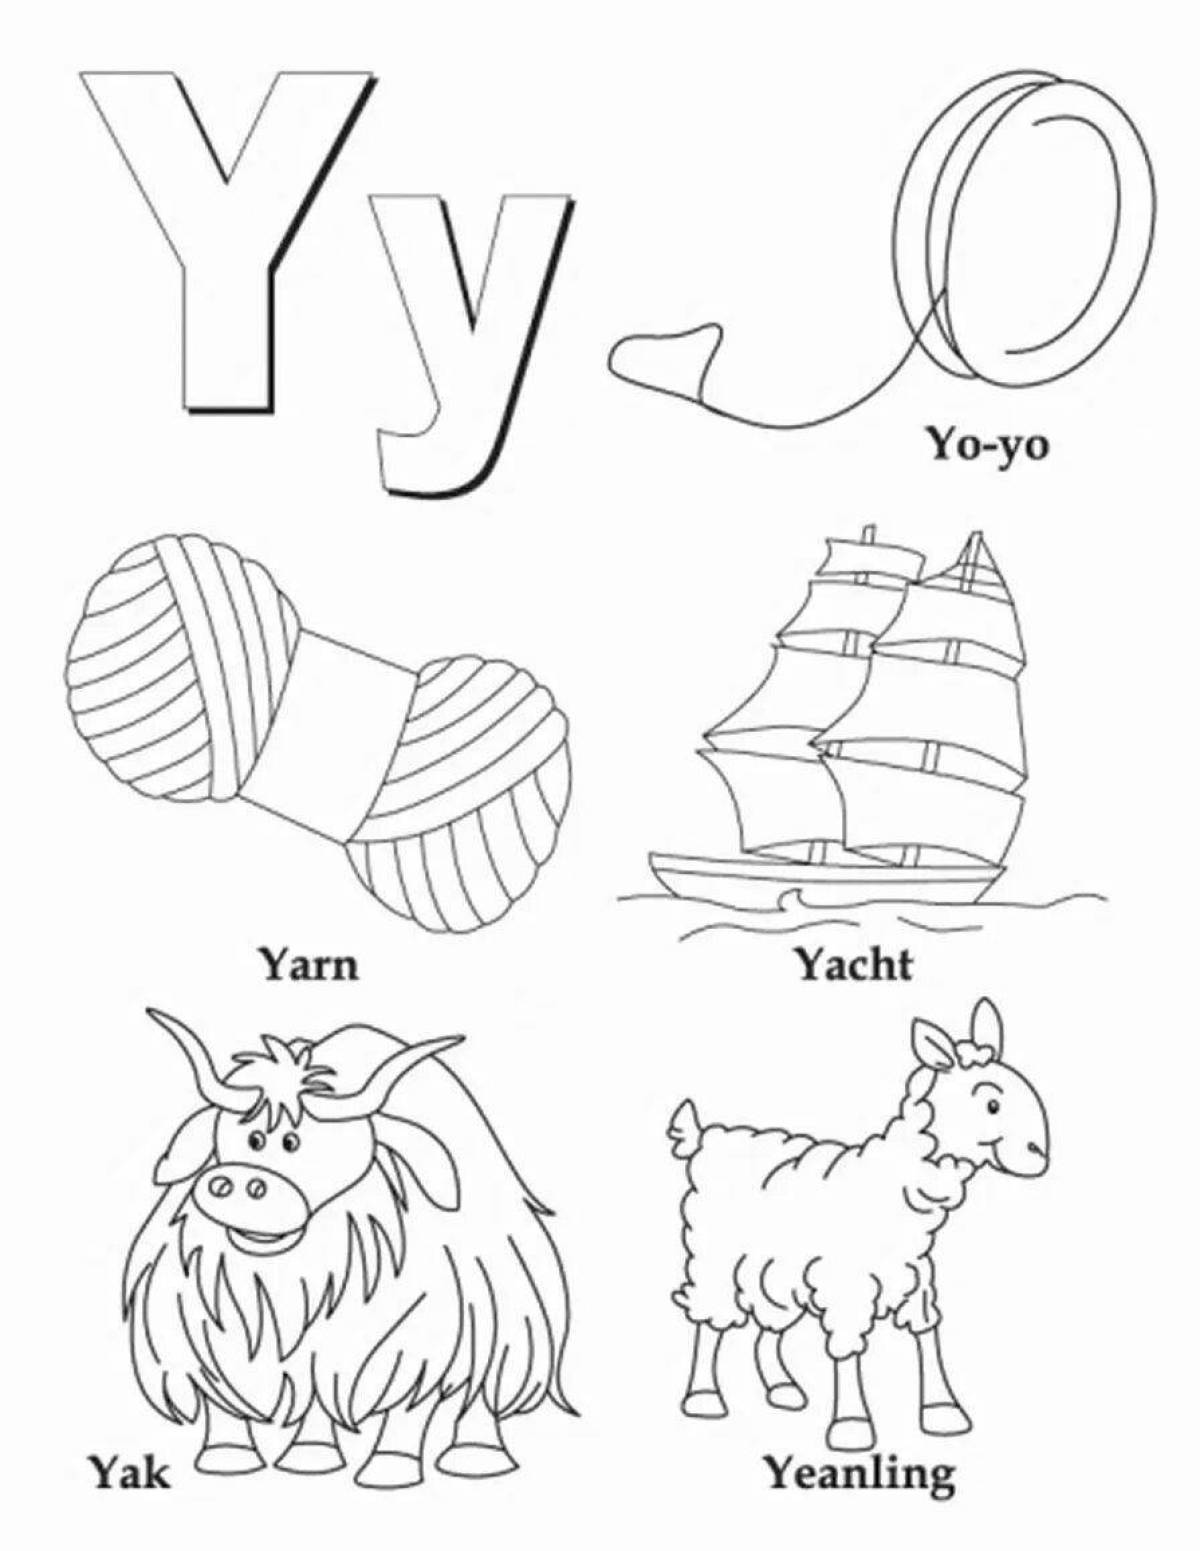 Charming english alphabet cards